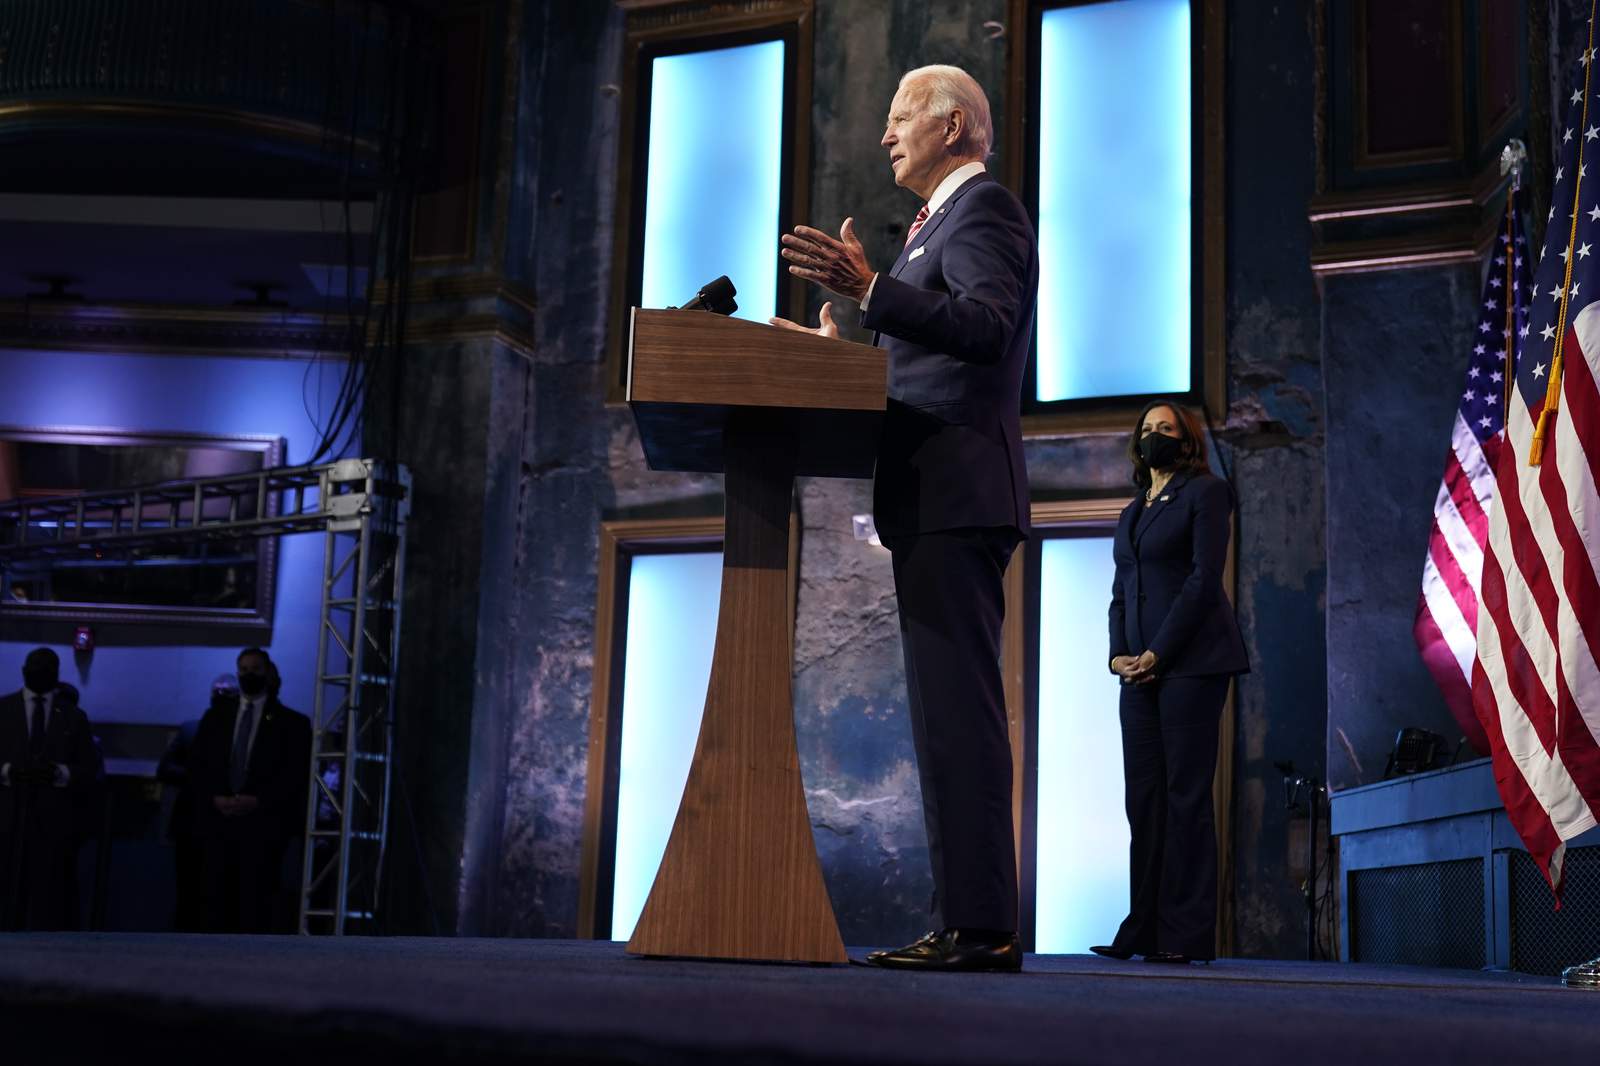 The Latest: Biden congratulates Pelosi on speaker nomination